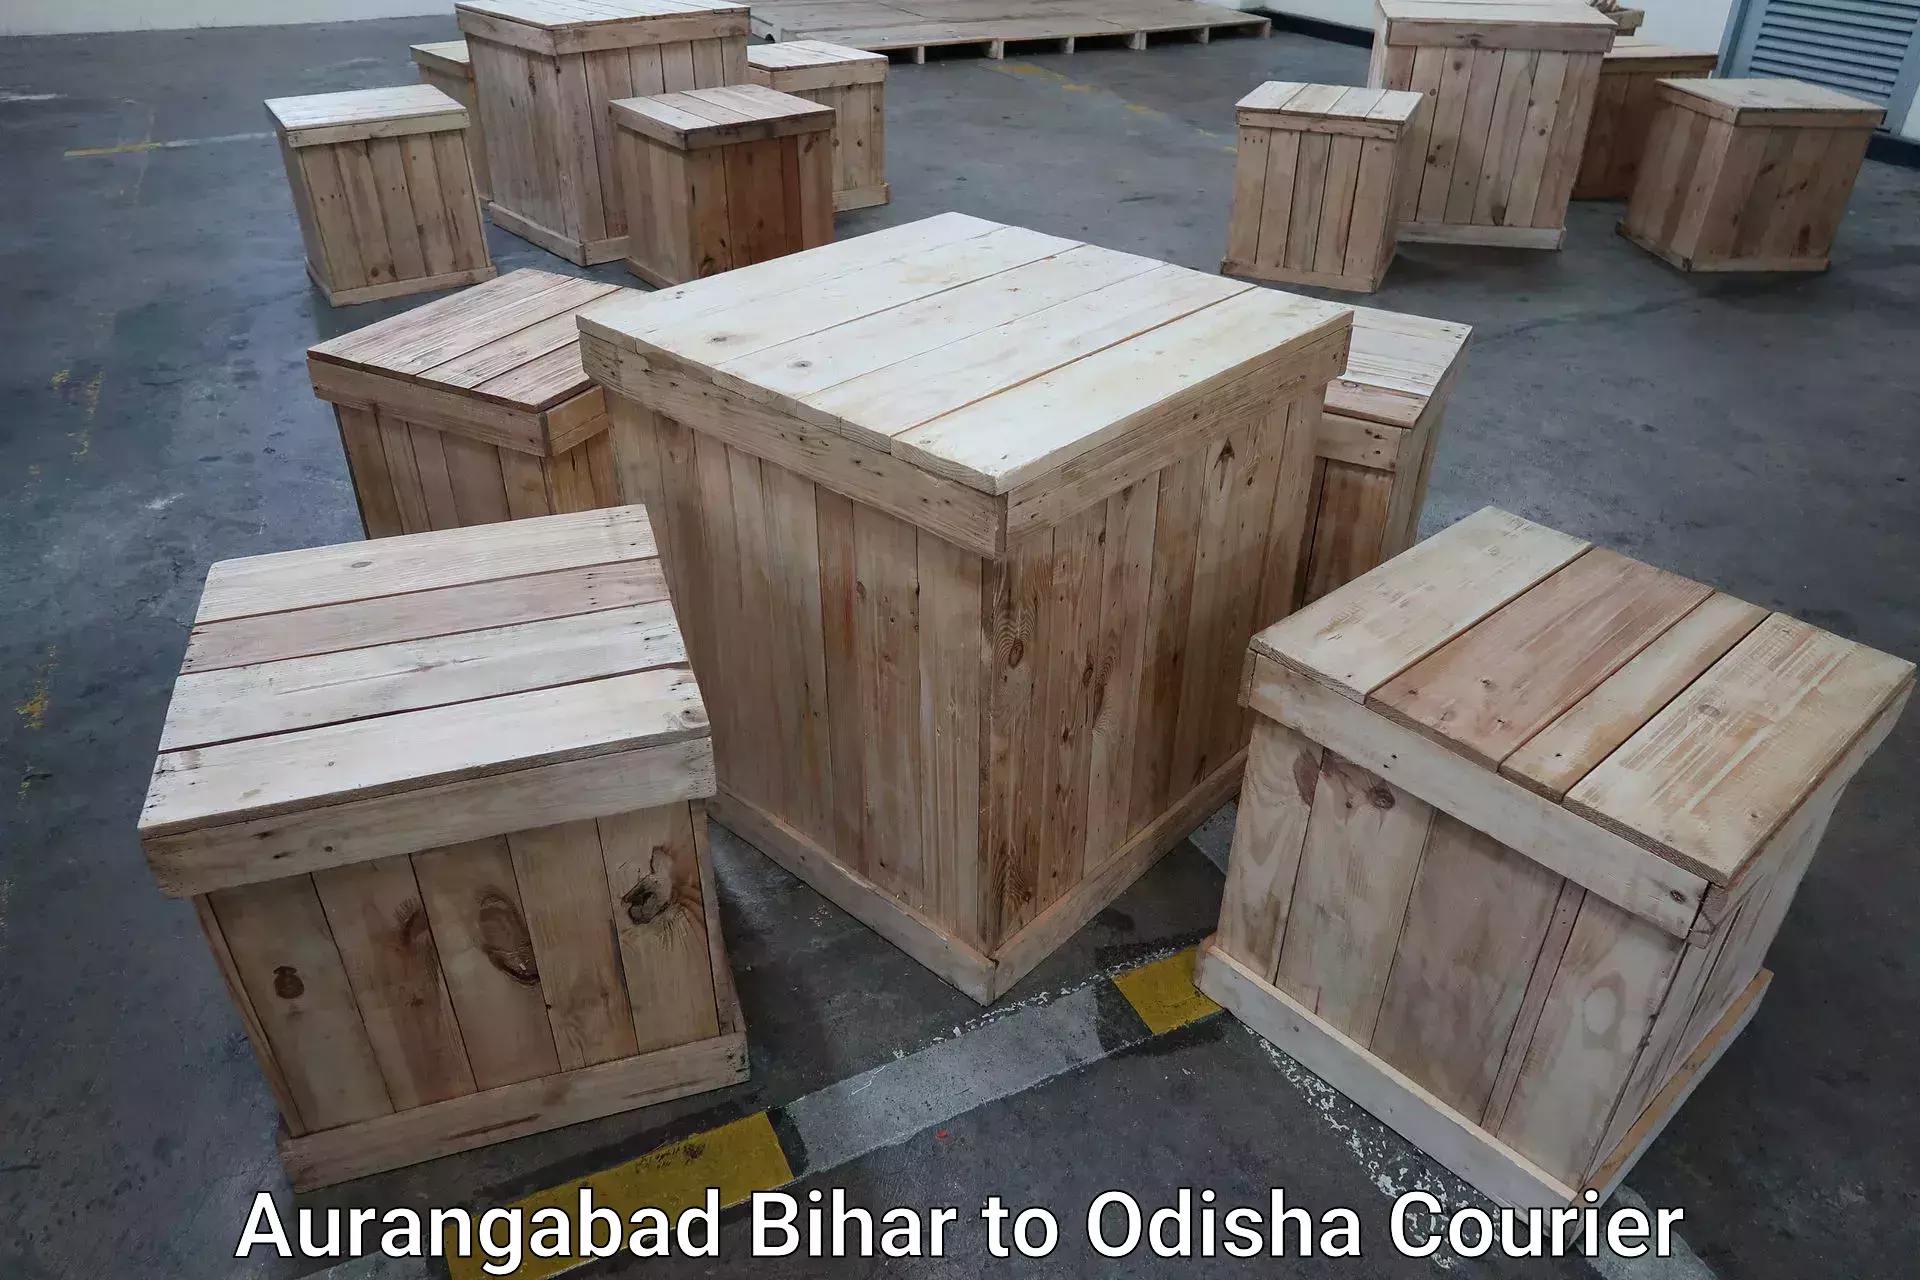 Luggage transport service Aurangabad Bihar to Adaspur